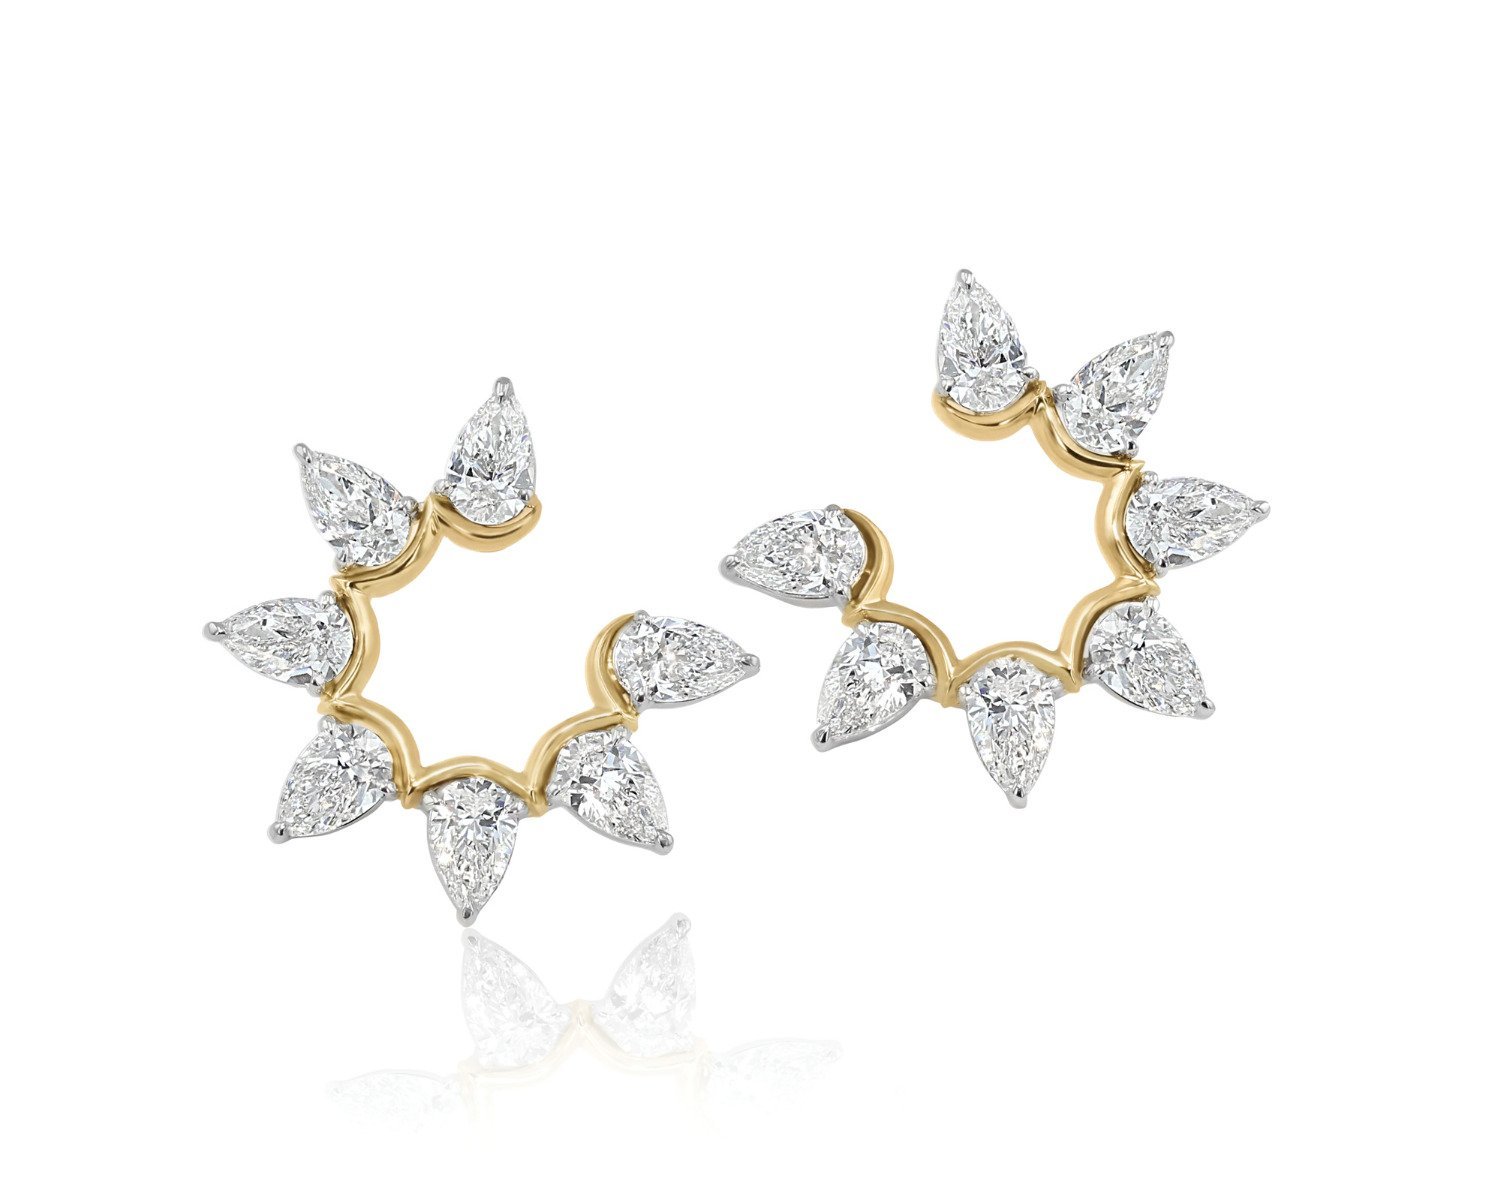 Phillips House "Affair" 18kt Yellow Gold & Platinum Pear Diamond Fan Earrings